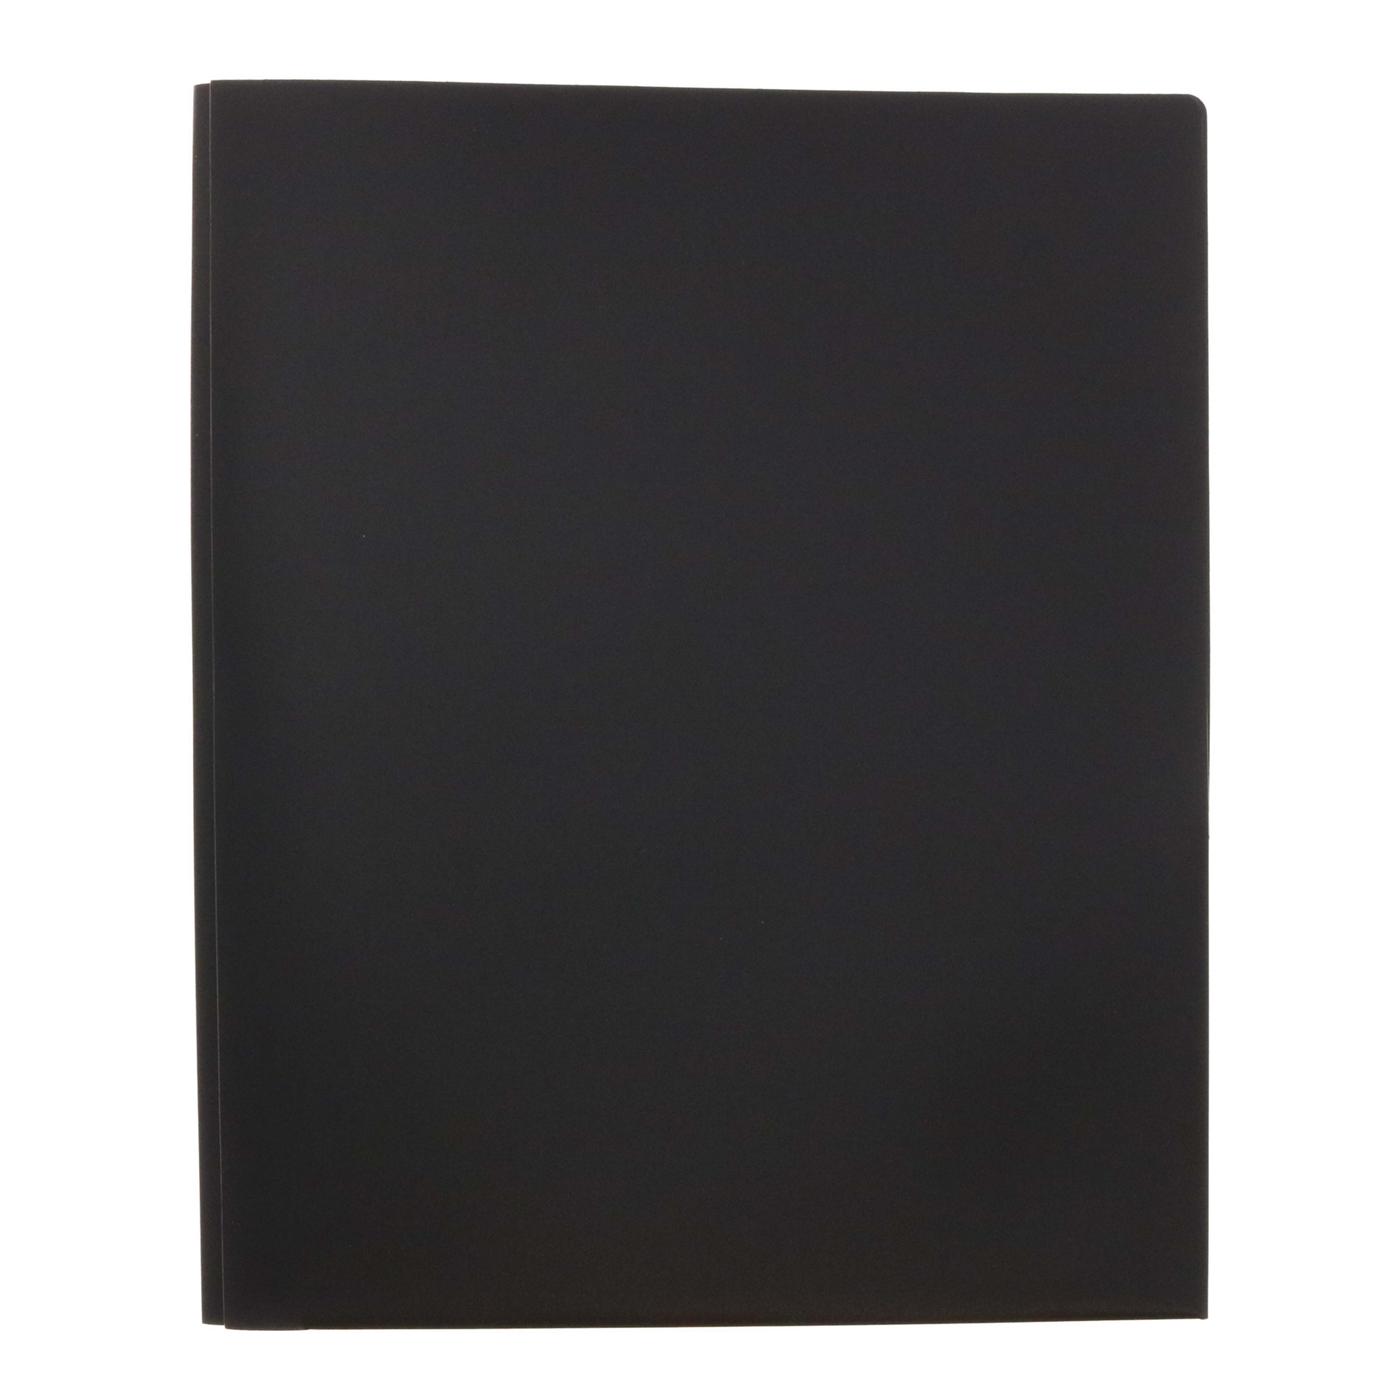 H-E-B Pocket Poly Folder with Prongs - Black; image 1 of 2